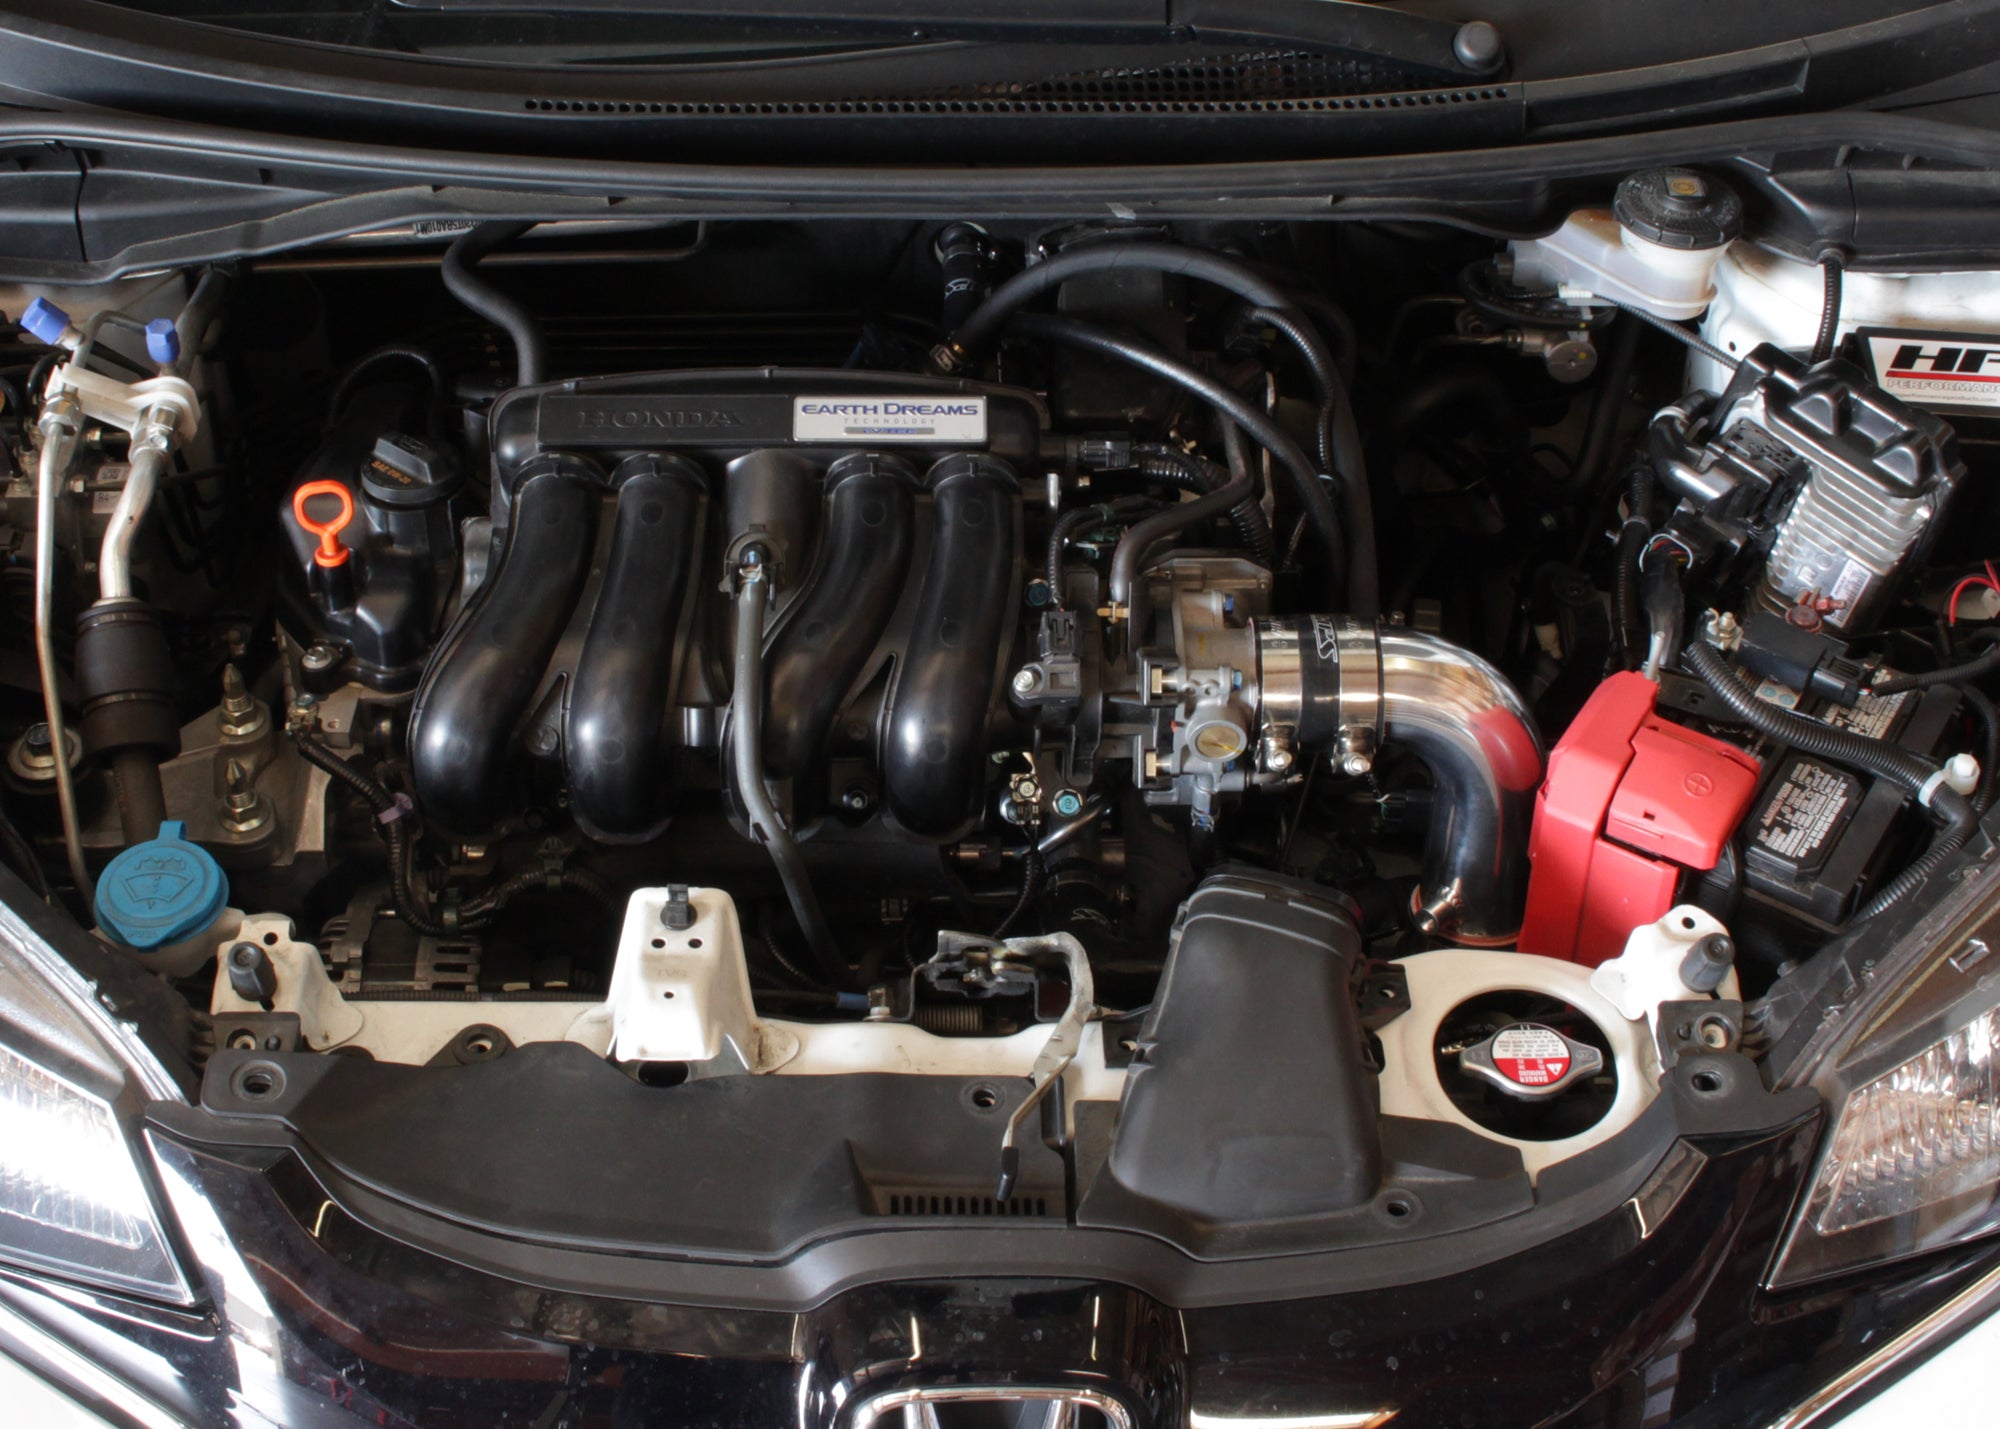 HPS Performance Cold Air Intake Kit (Converts to Shortram) Installed 2015-2018 Honda Fit 1.5L Manual Trans. 837-568